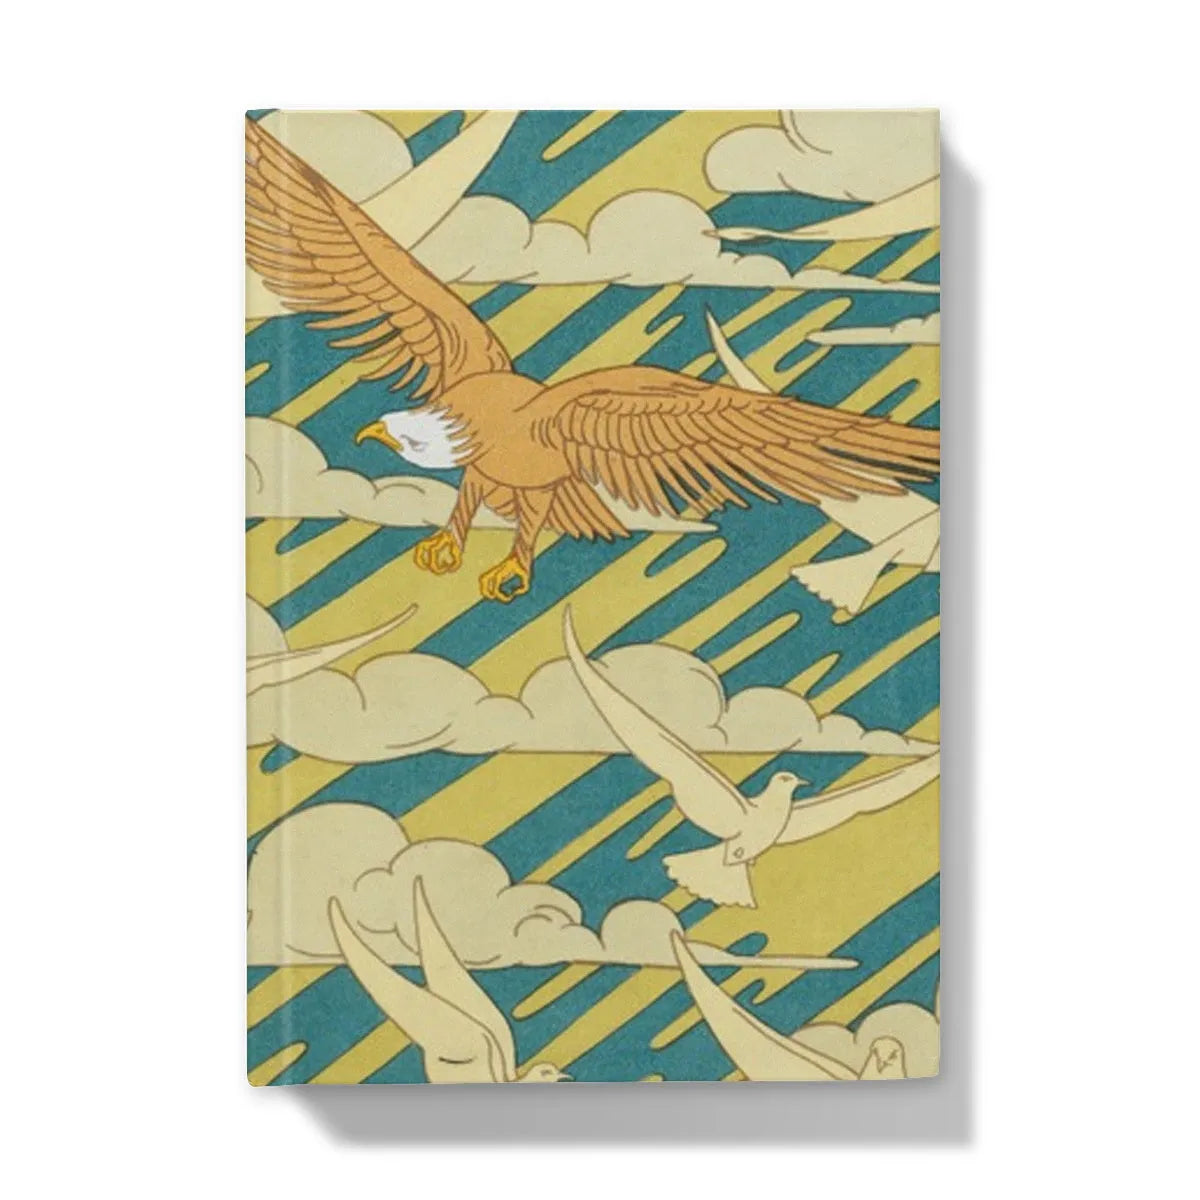 Aigles Et Pigeons By Maurice Pillard Verneuil Hardback Journal - 5’x7’ / 5’ x 7’ - Lined Paper - Notebooks &